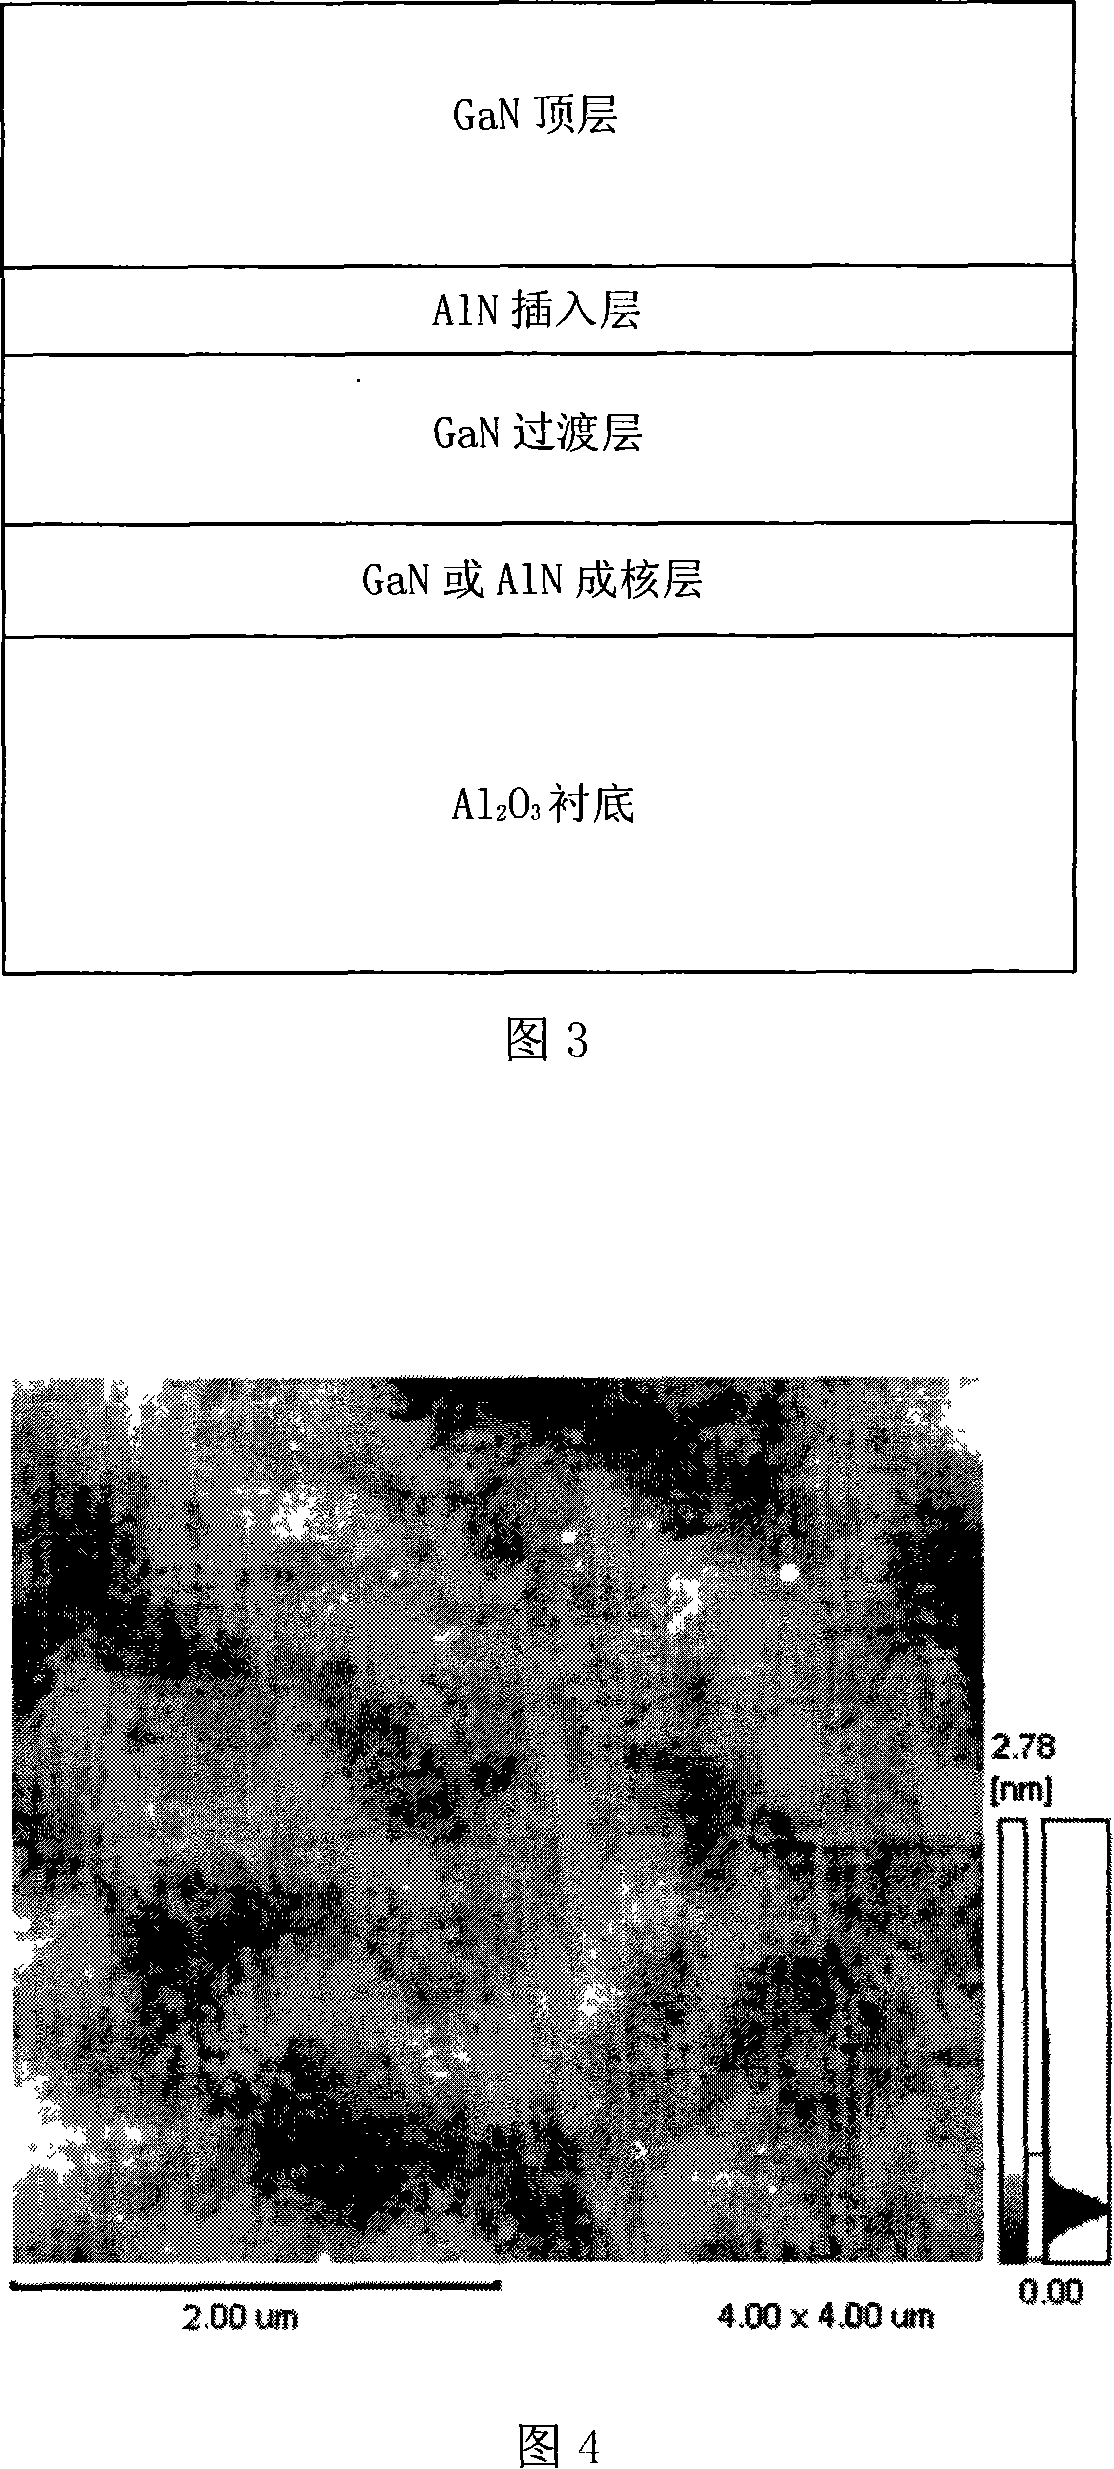 GaN thin film upgrowth method based on Al3O2 substrate